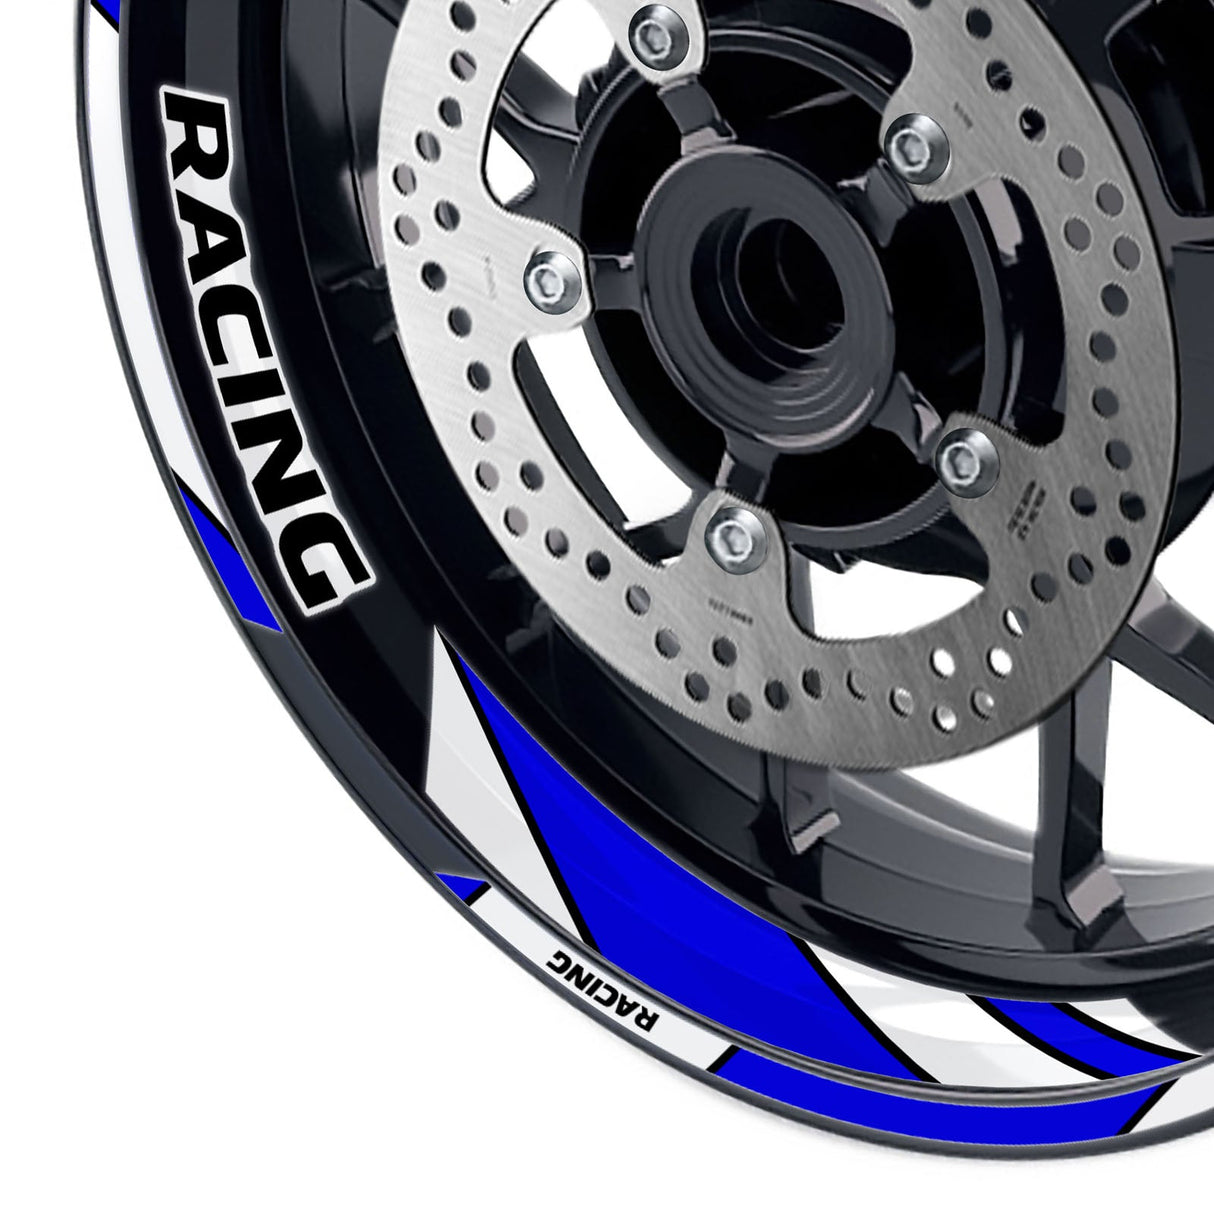 StickerBao Blue 17 inch GP06 Platinum Inner Edge Rim Sticker Universal Motorcycle Rim Wheel Decal Racing For Aprilia